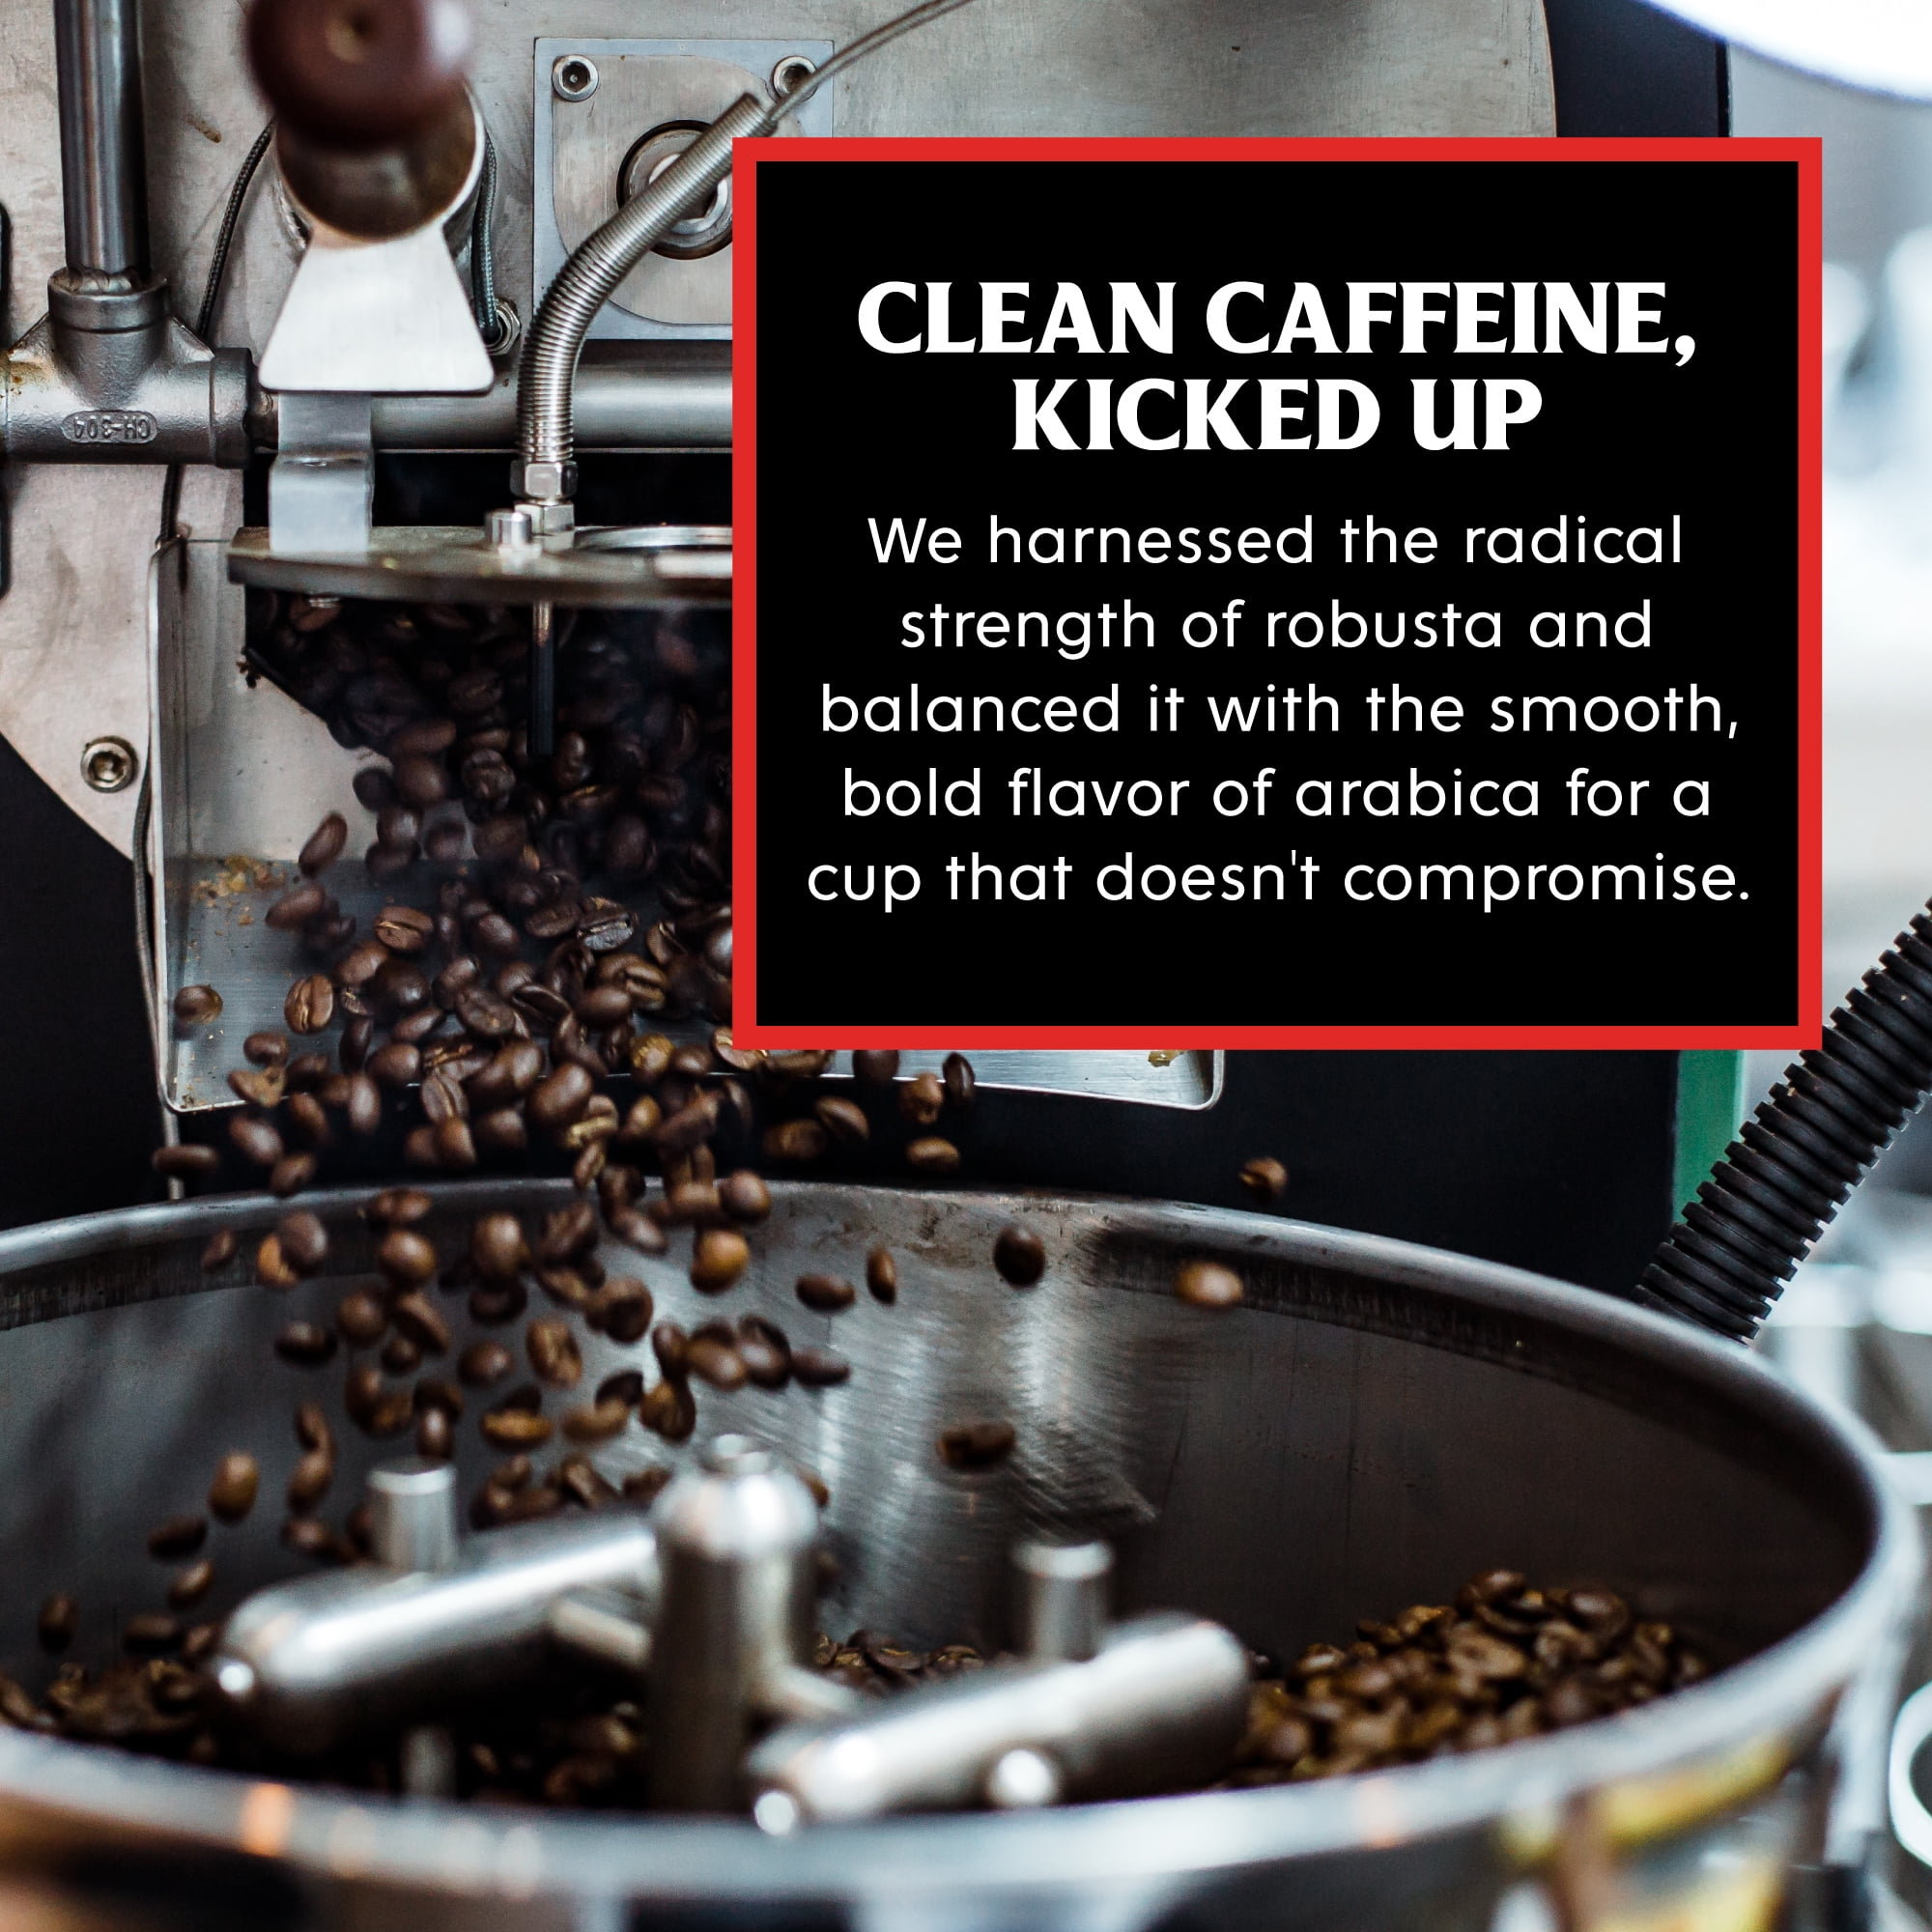 The Best Way To Reheat Coffee – Death Wish Coffee Company